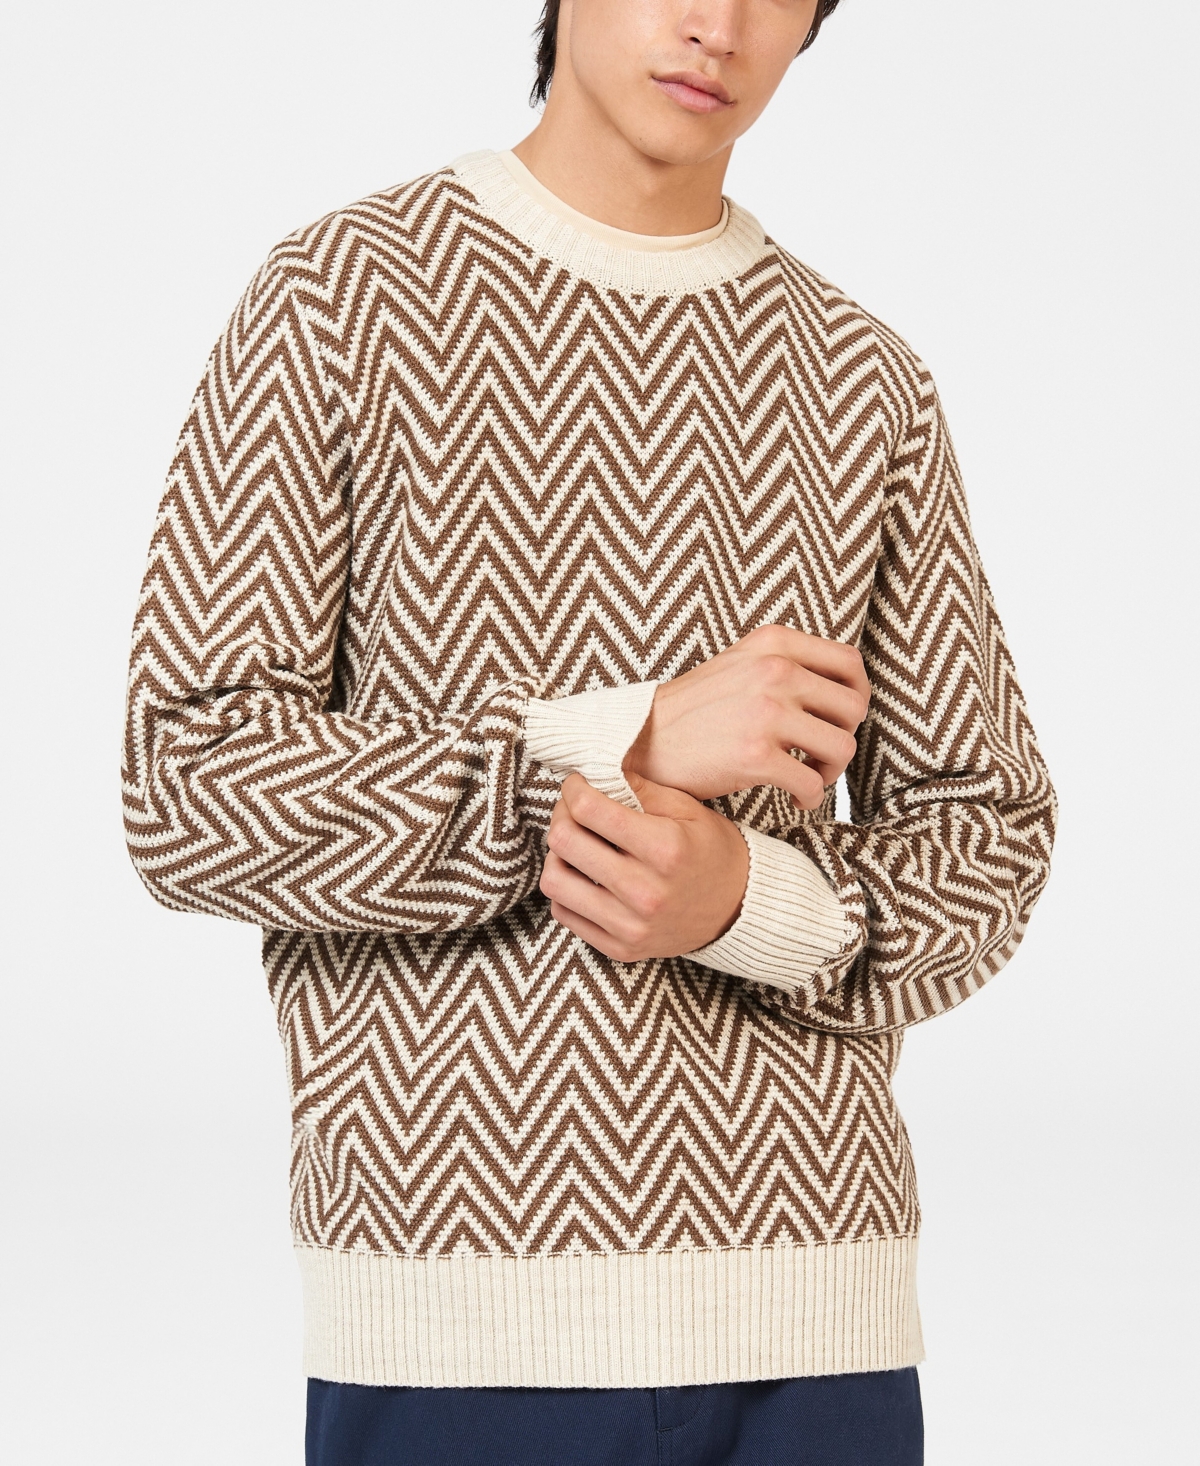 Men's Jacquard Crew Sweater - Ivory